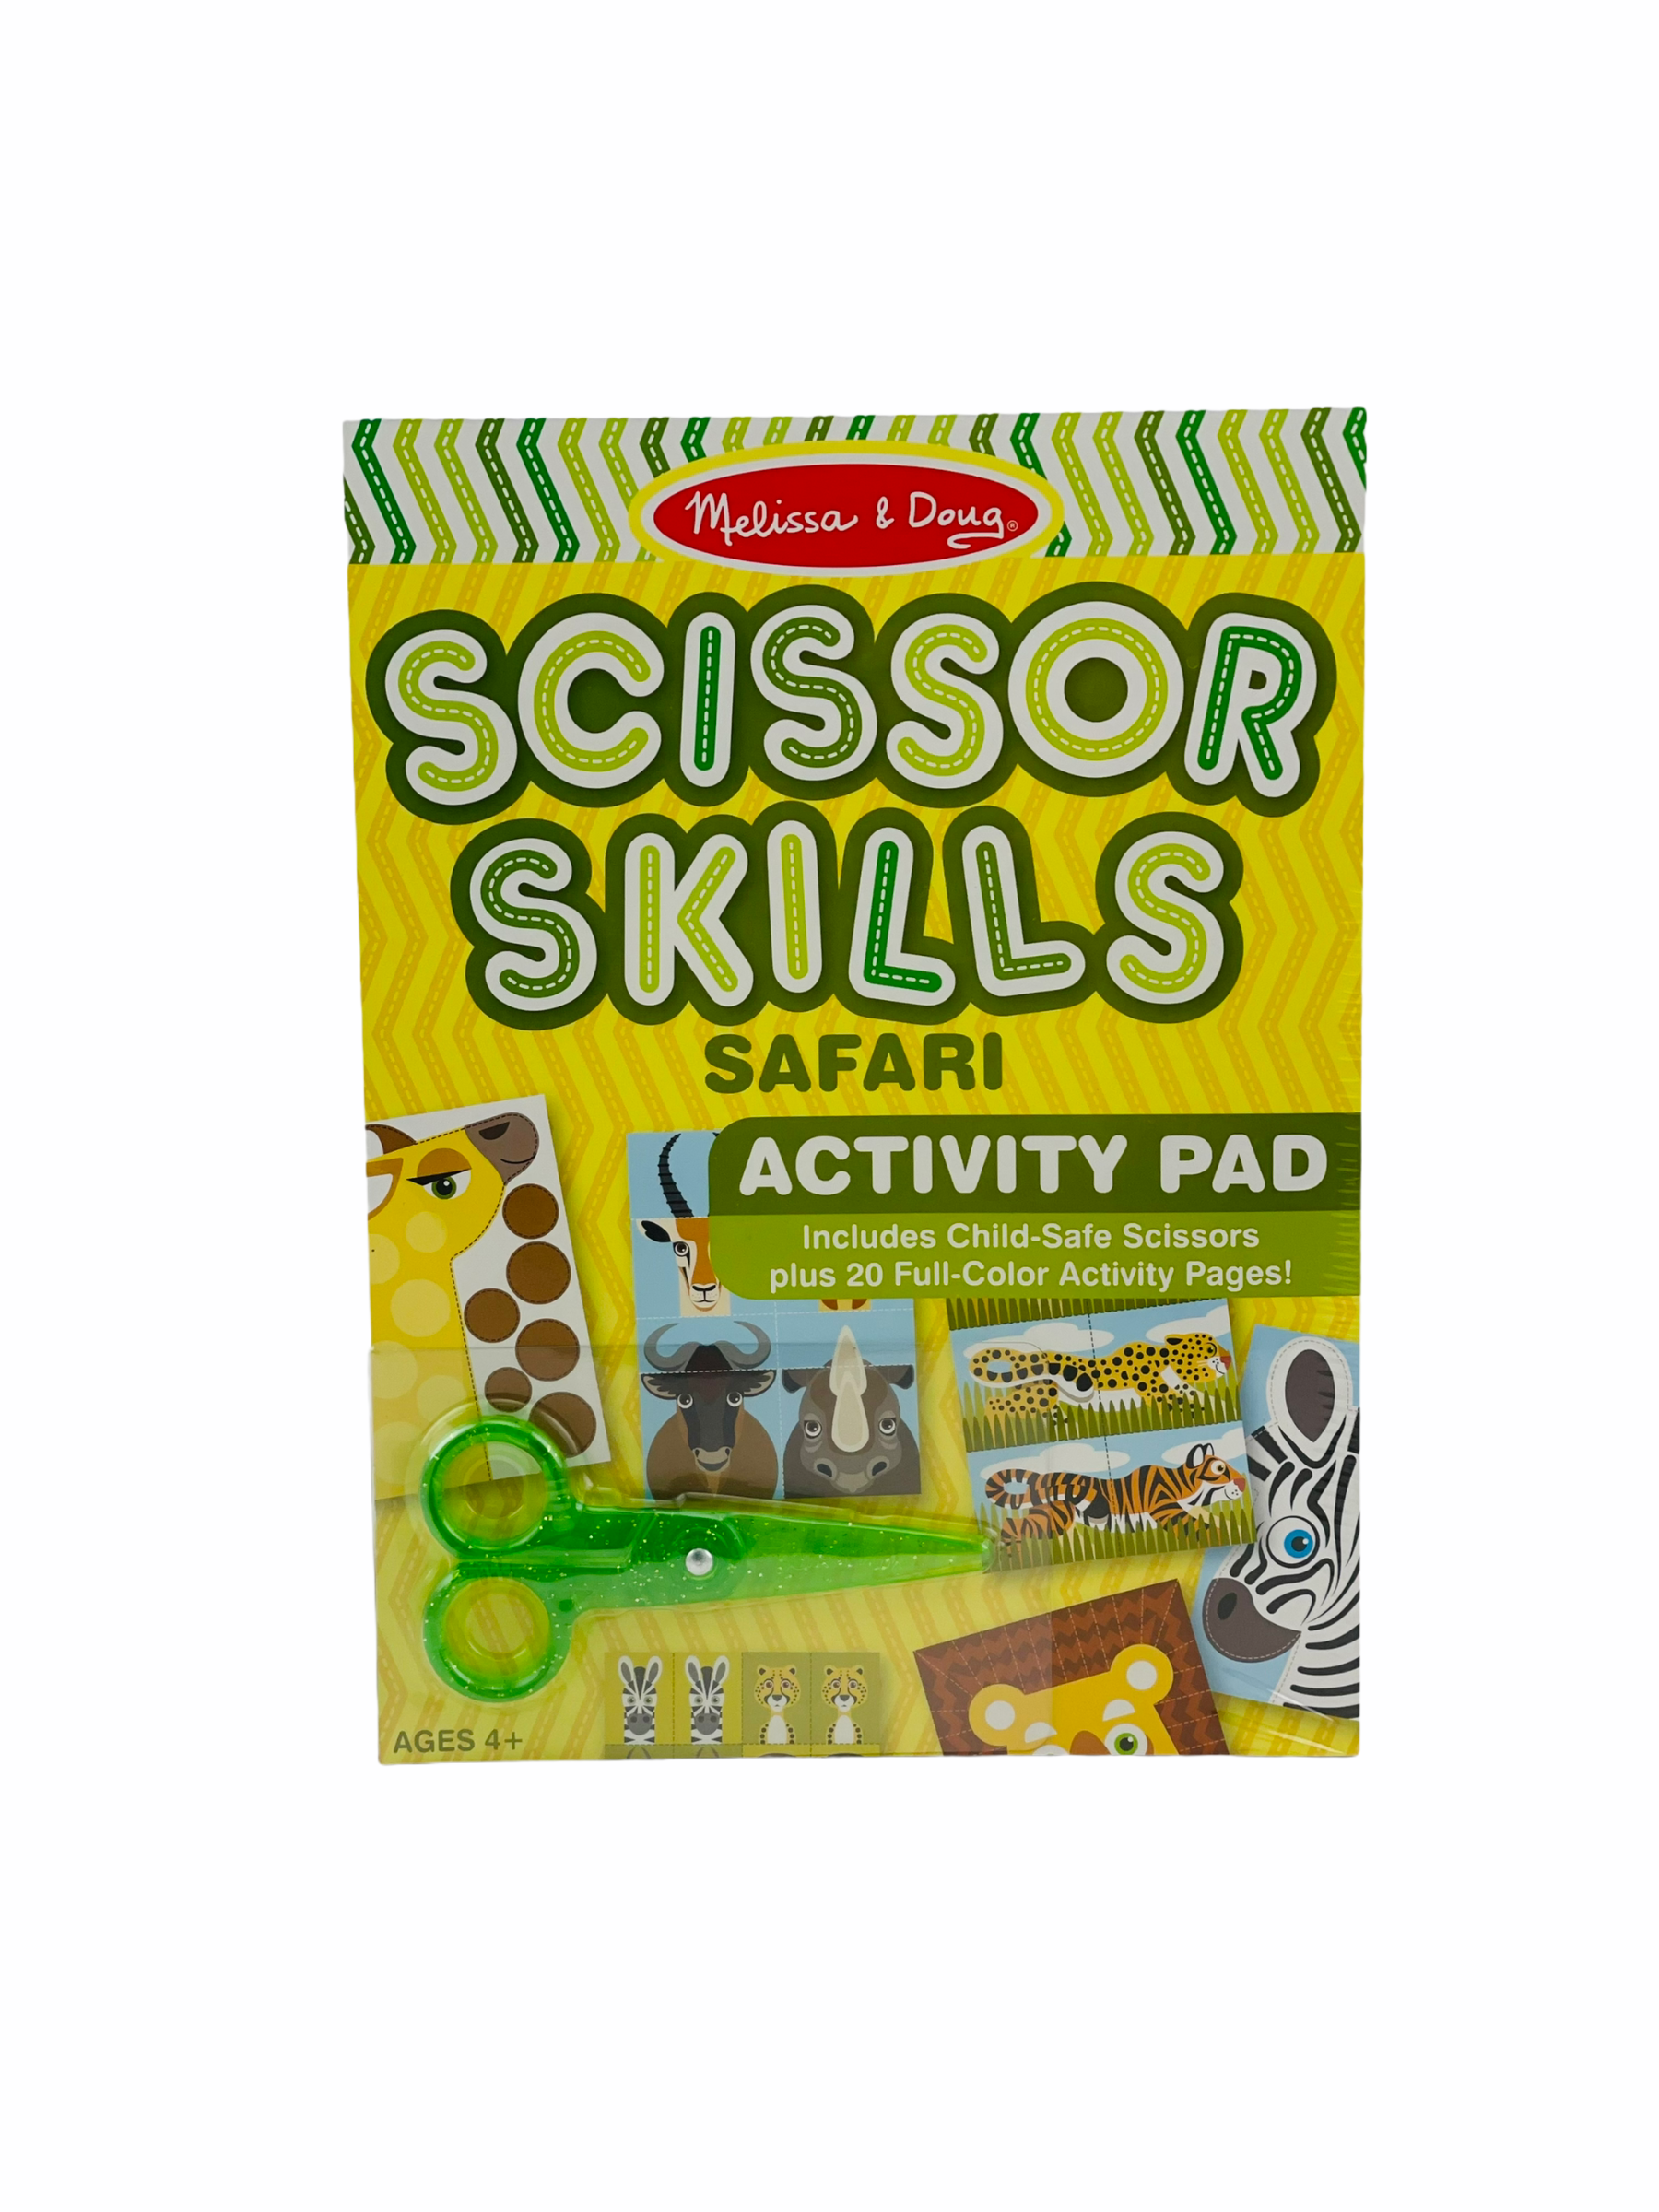 The Melissa & Doug Scissor Skills Activity Pad - safari on a white background